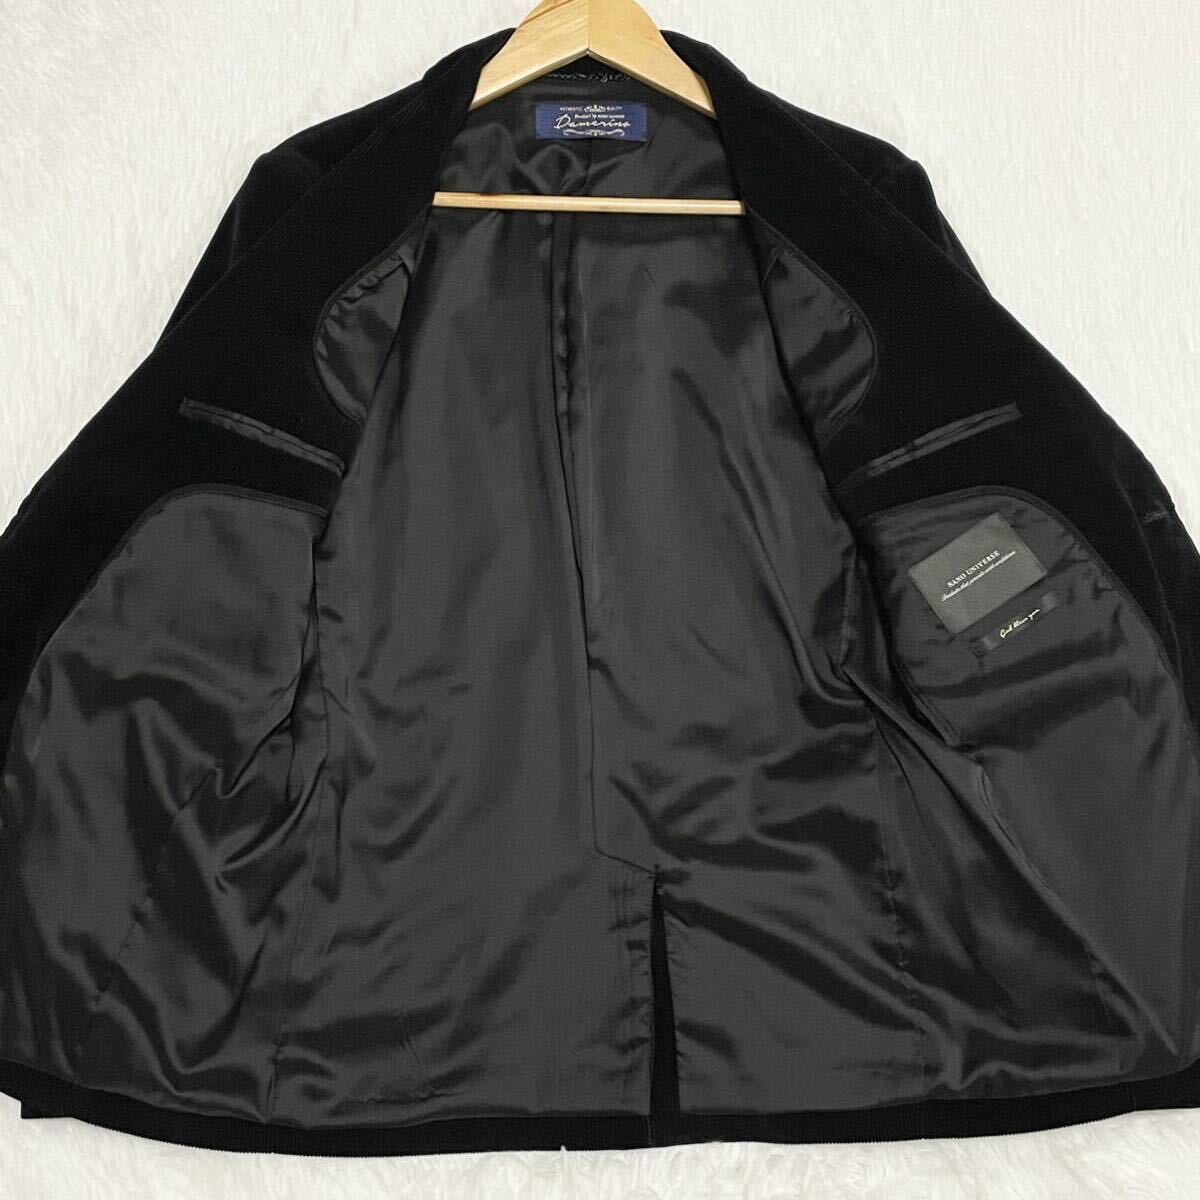  Nano Universe [ adult goods .]NANO UNIVERSE setup suit jacket corduroy black black stretch cotton M 3799